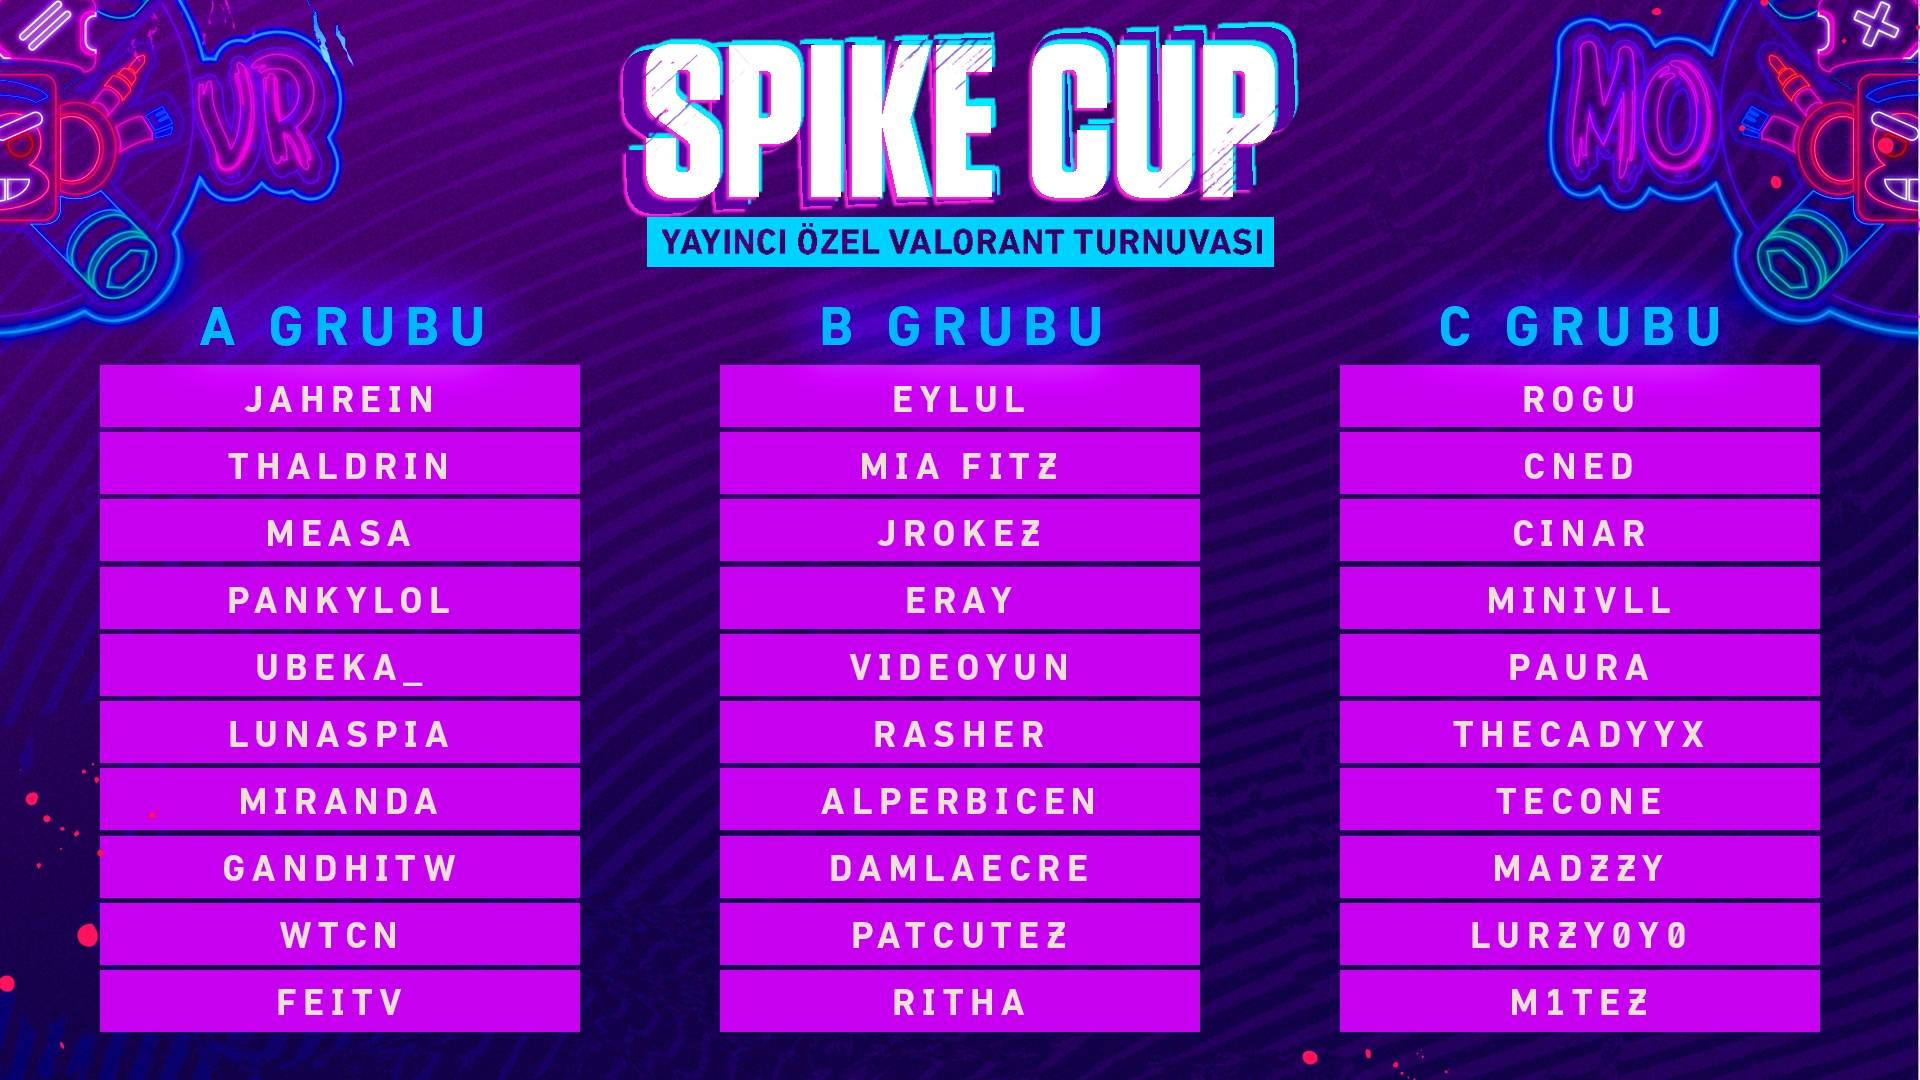 Spike cup